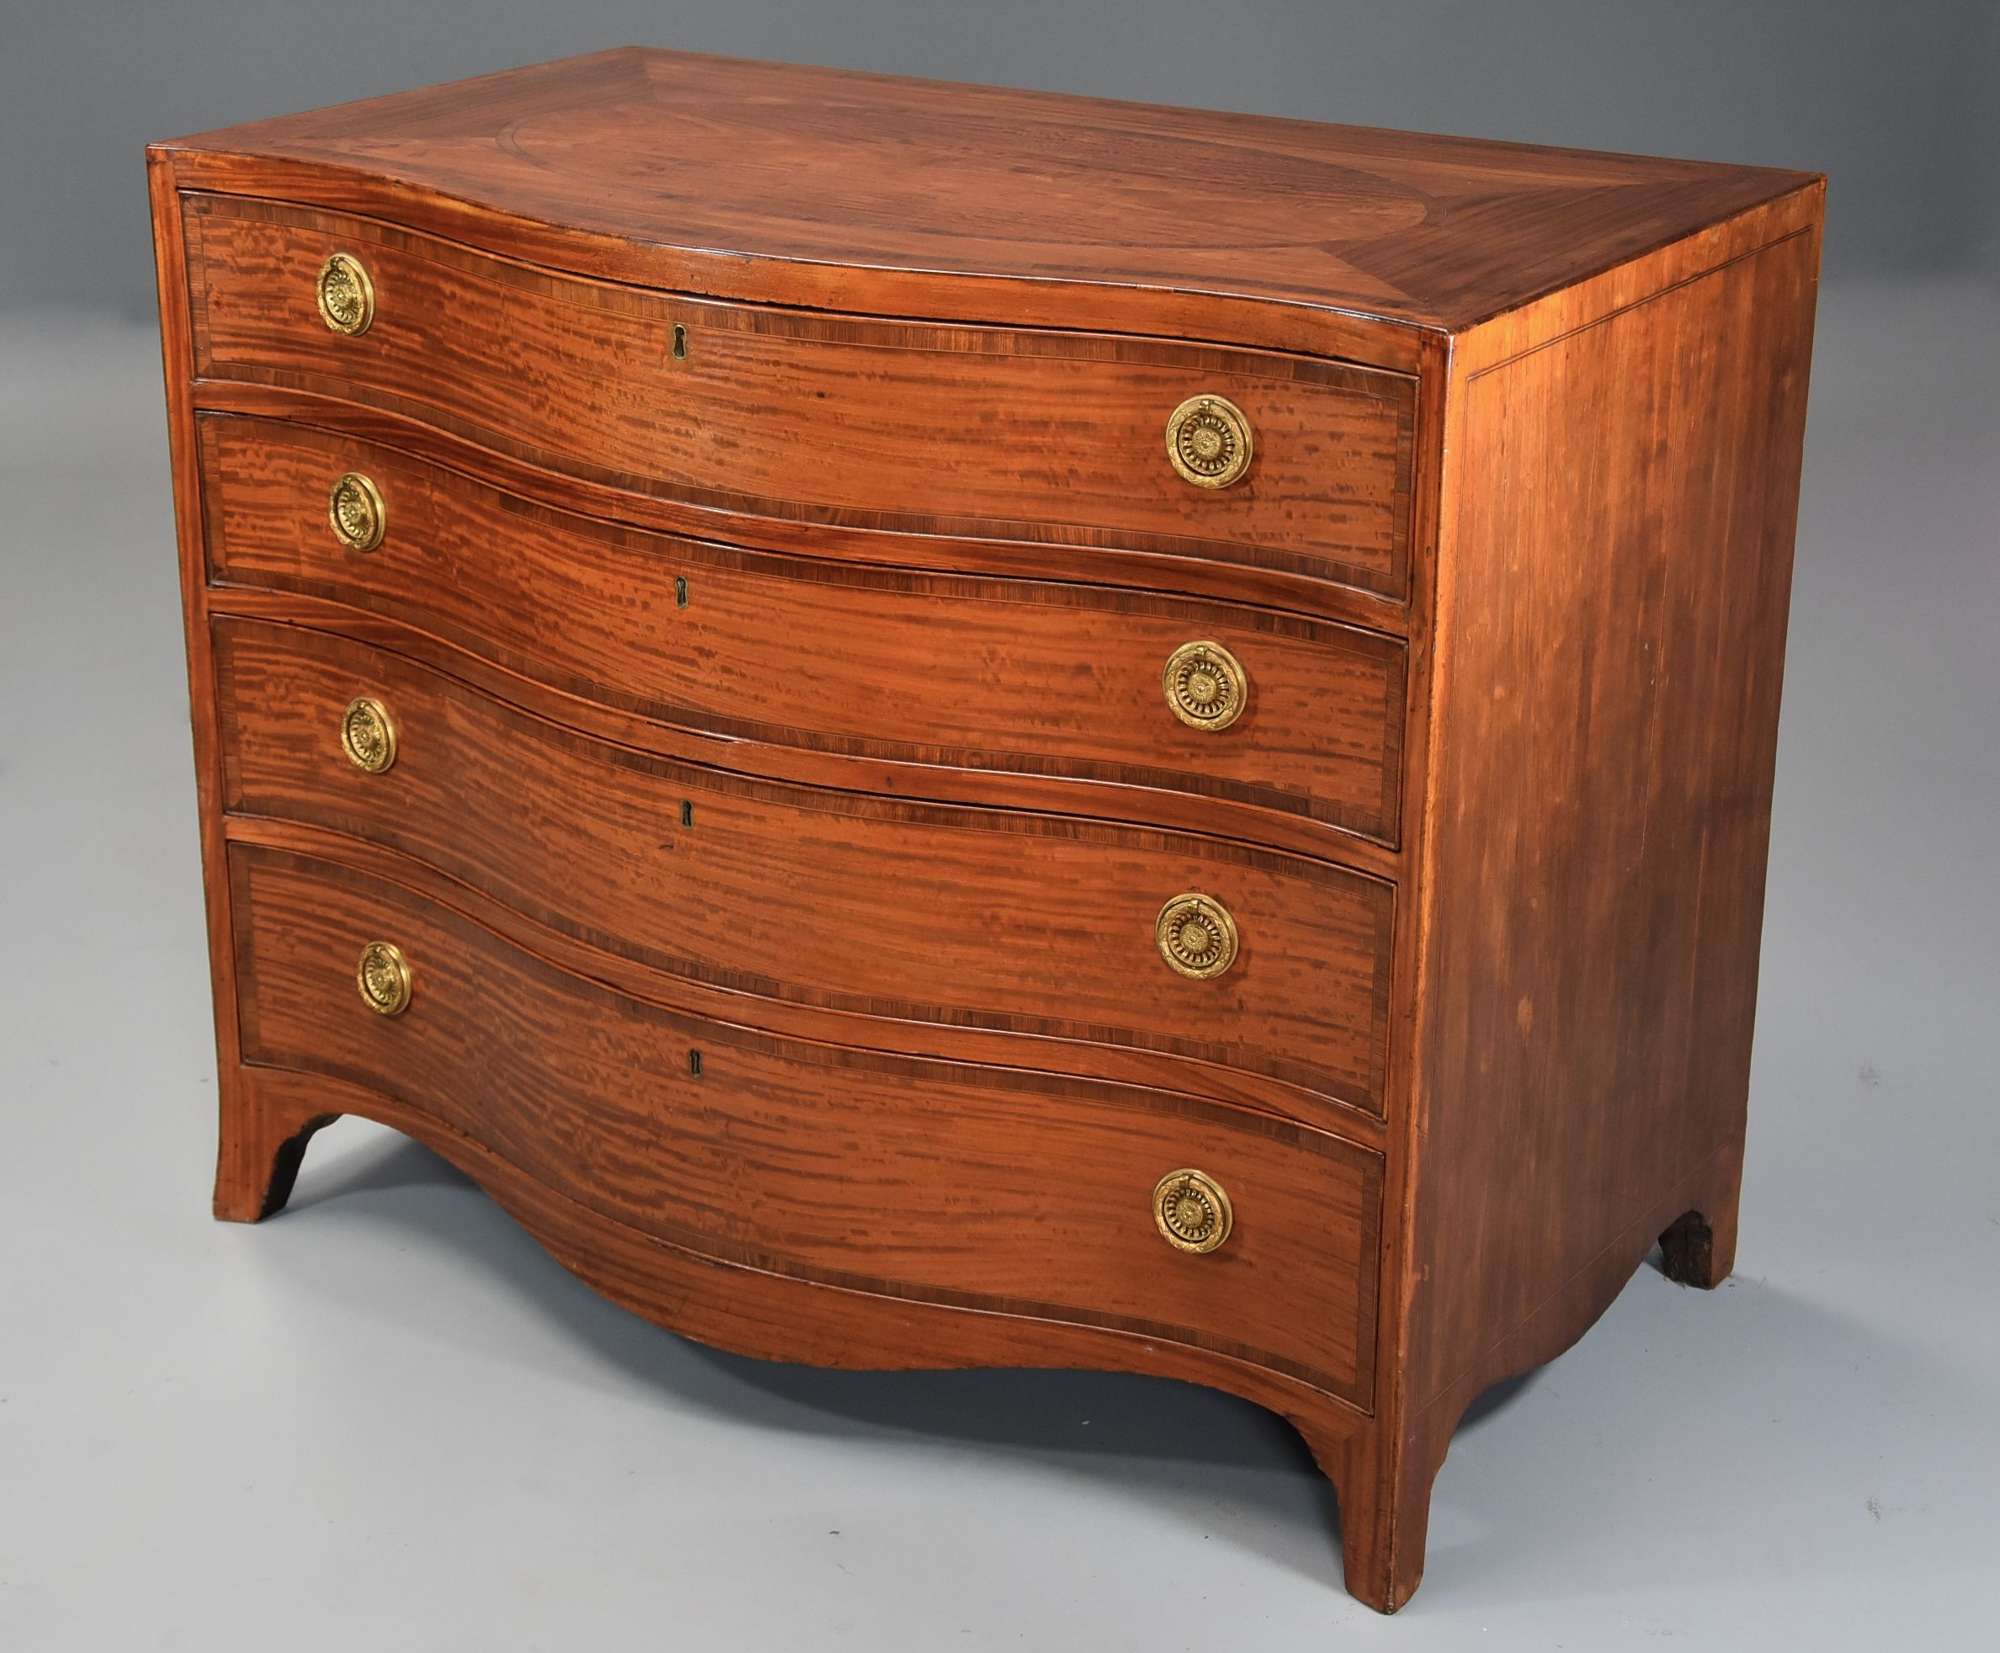 Superb quality serpentine shaped satinwood gentleman's dressing chest